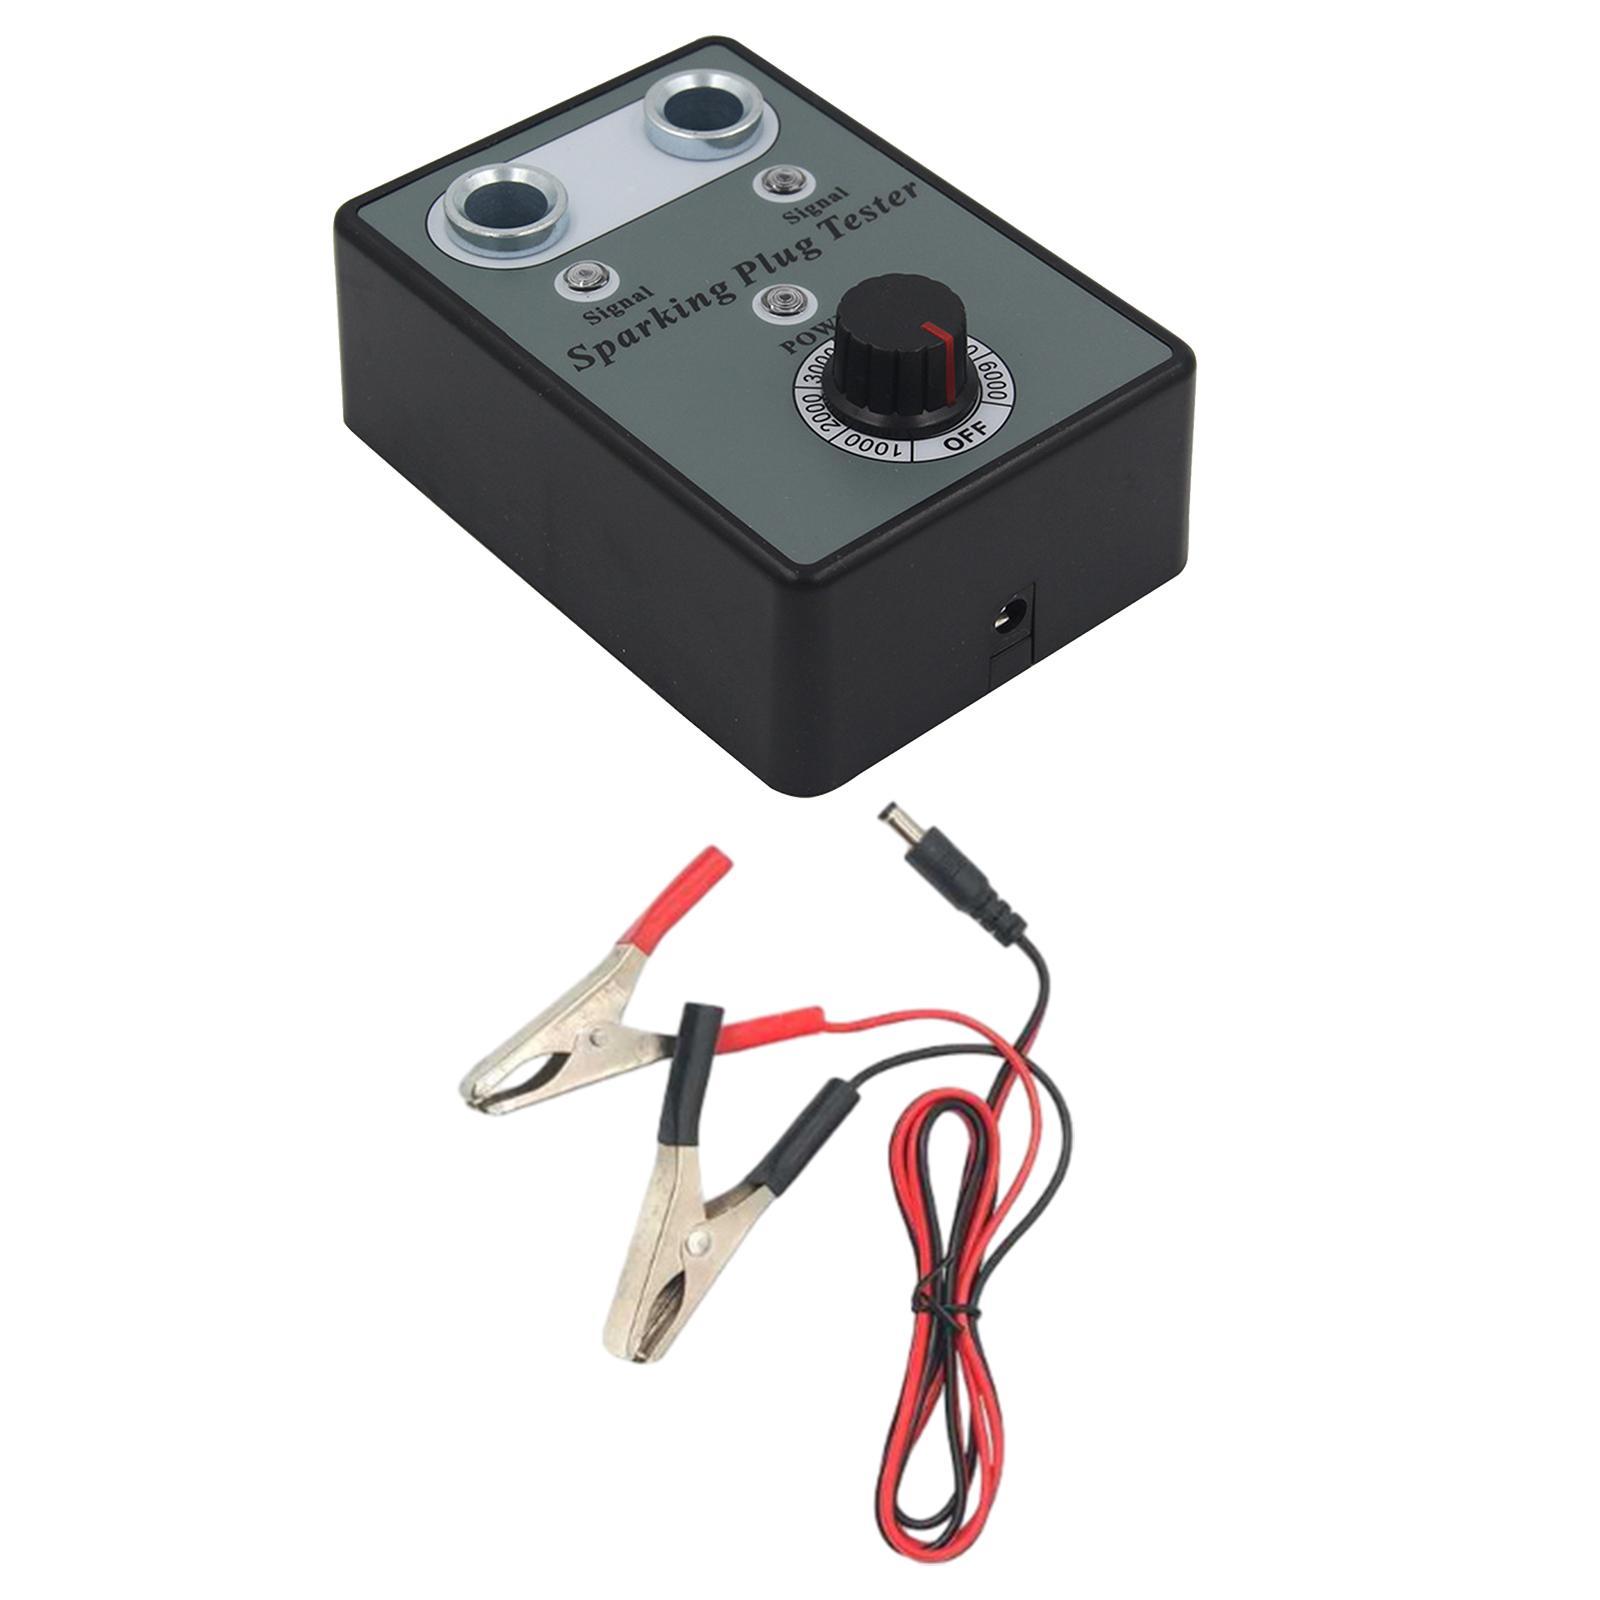 Dual Hole Spark Plug Tester Tool Ignition Plug Analyzer Sparking Plug Tester